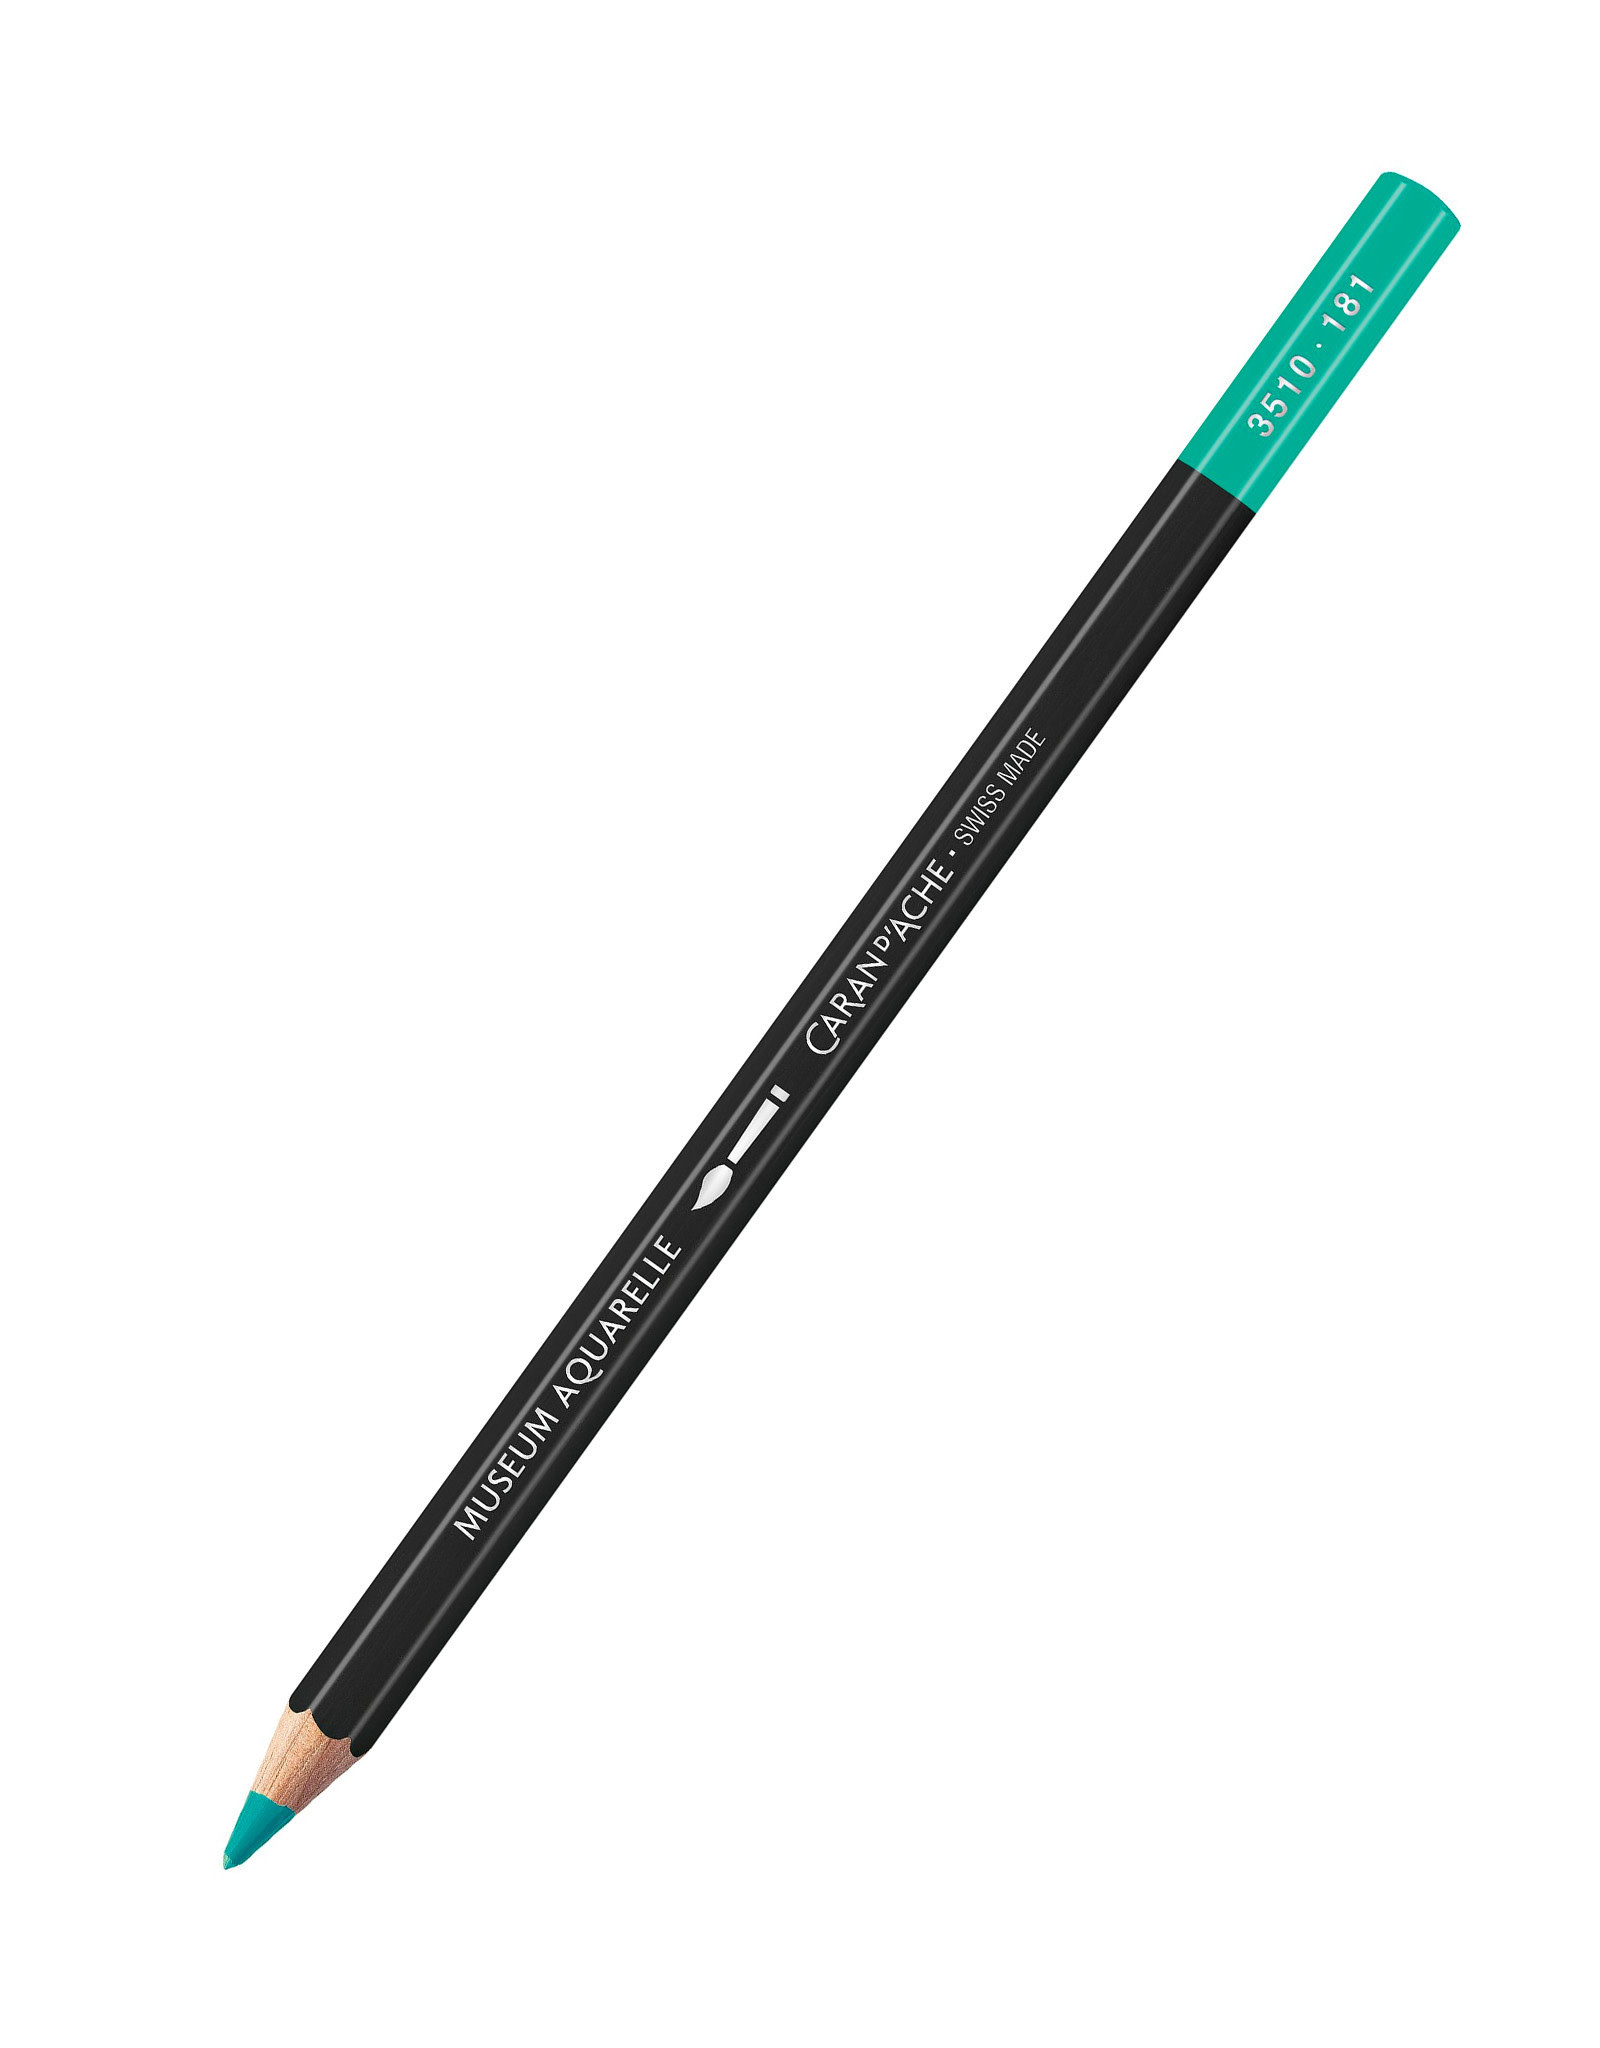 Caran d'Ache Caran D'Ache Museum Aquarelle Colored Pencils, Light Malachite Green